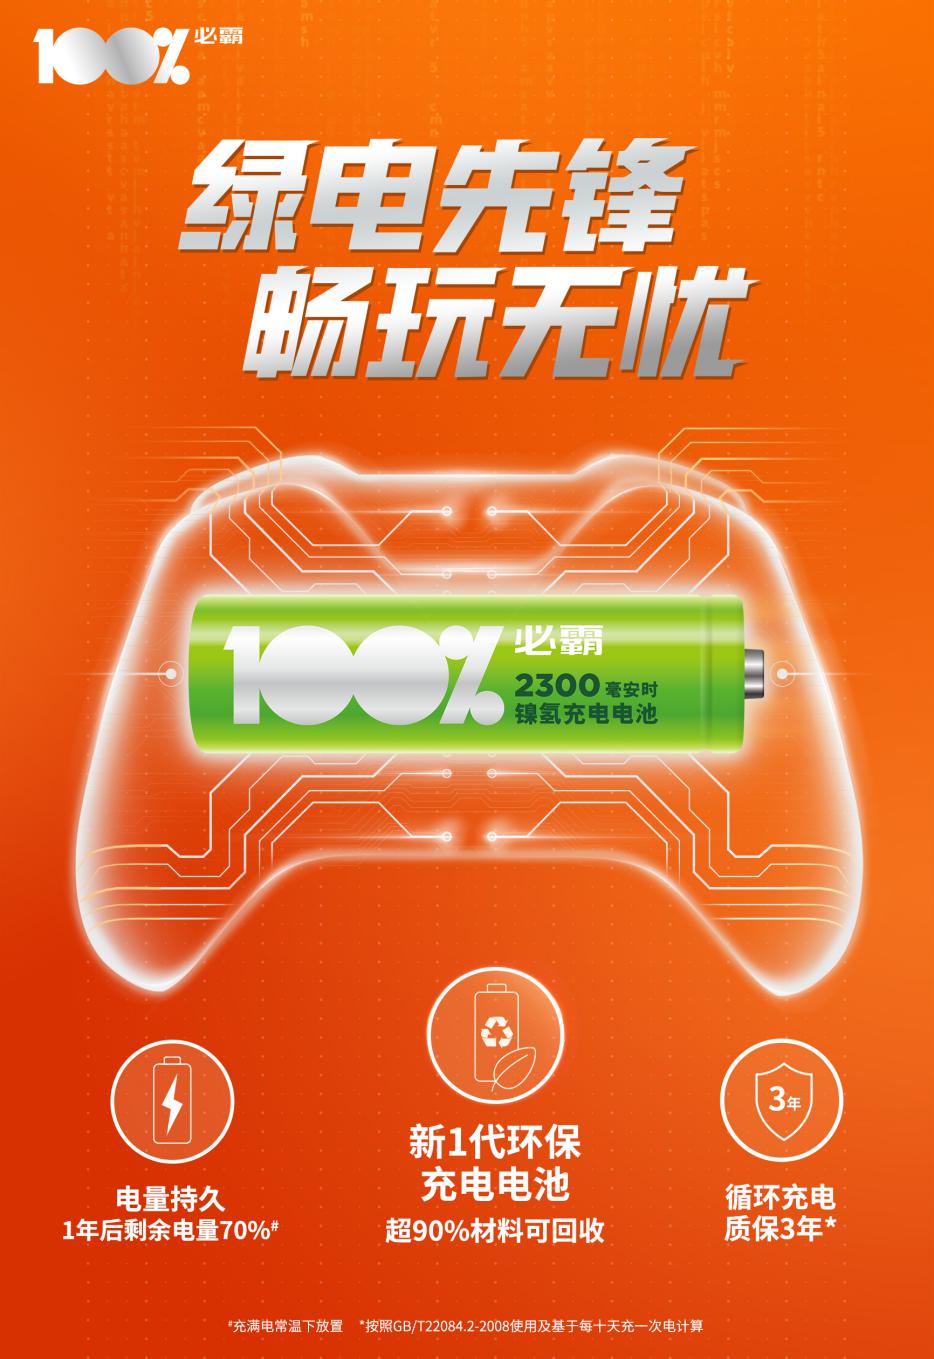 GP超霸子品牌100%必霸盛大上市，战Xbox足柄更配喔！